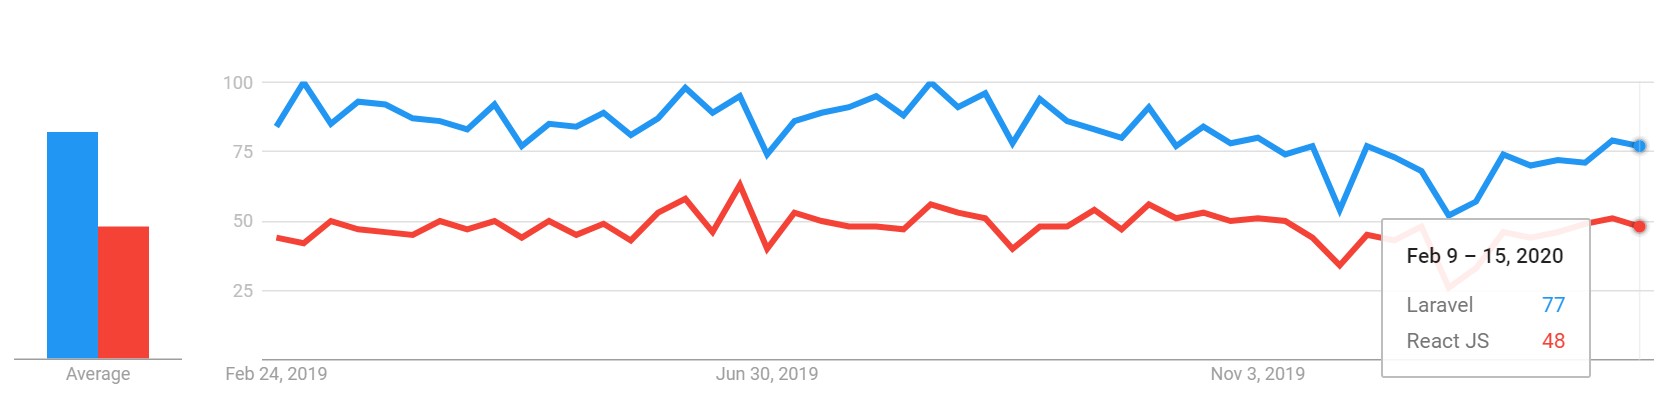 Laravel is more popular than React JS.